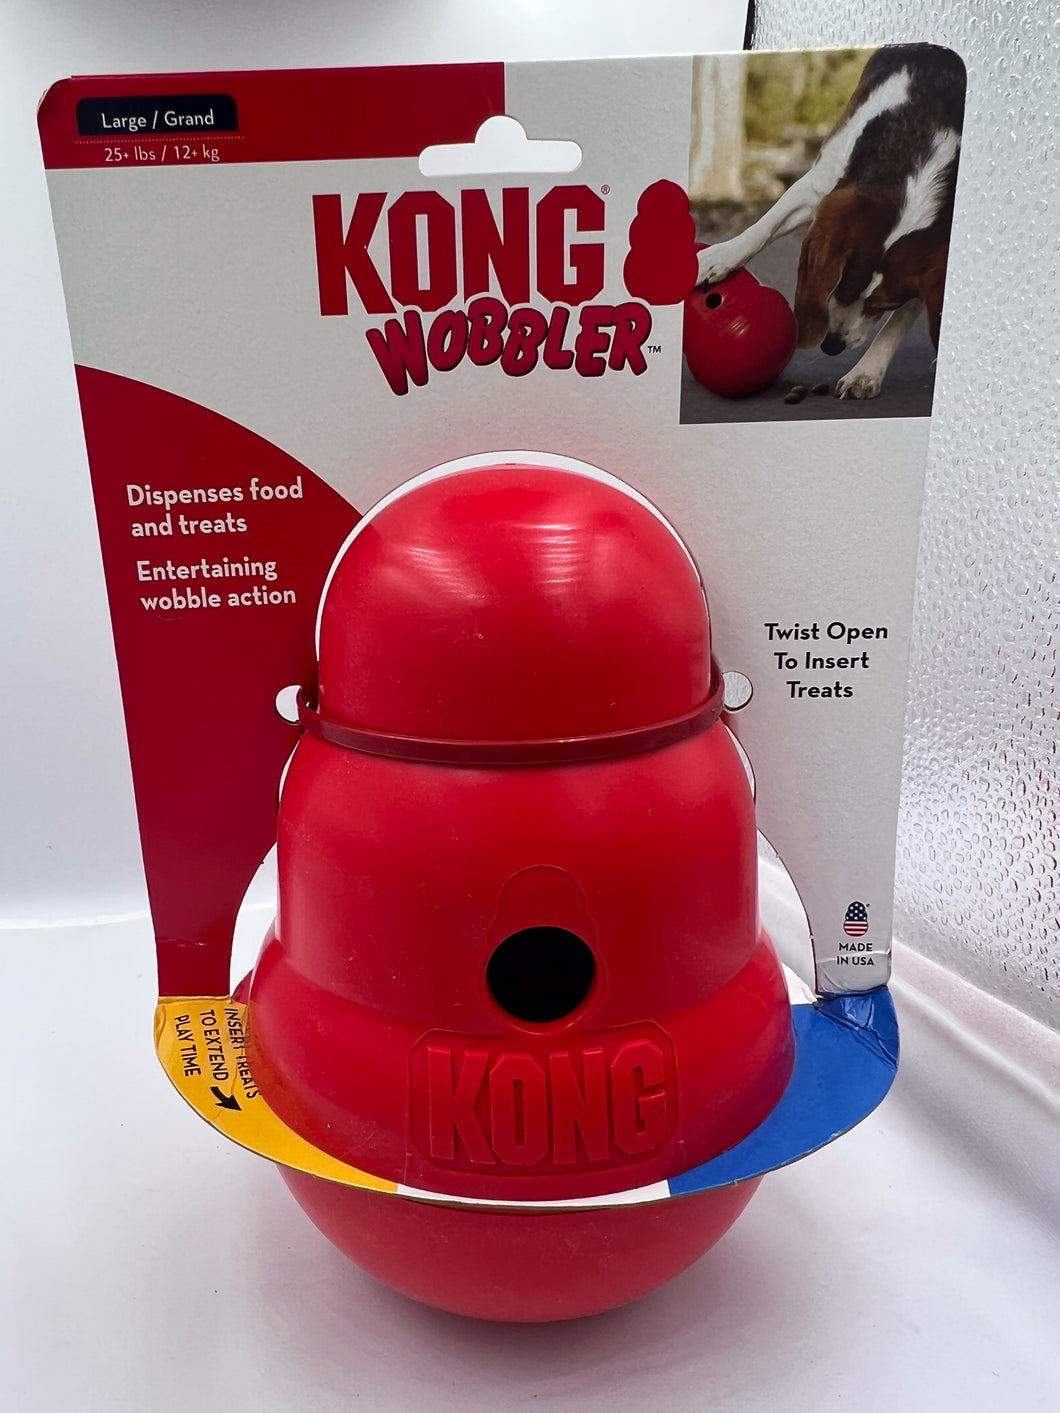 Kong Wobbler:  A Toy and Treat / Food Dispenser